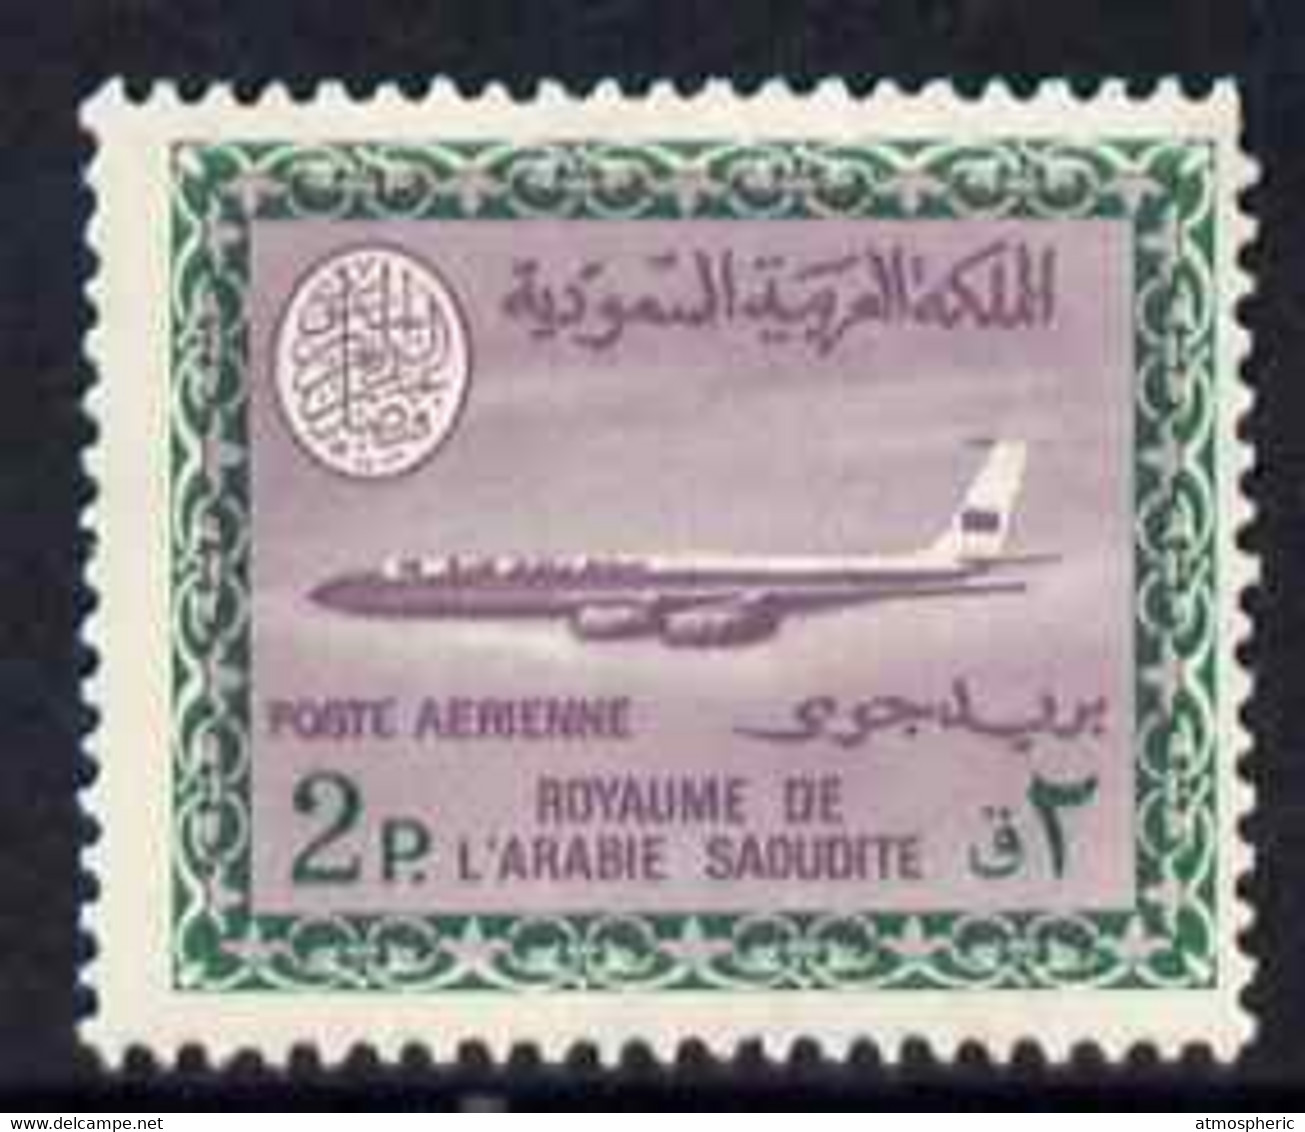 Saudi Arabia 1967-74 Boeing 720B Aircraft 2p (wmk'd) Unmounted Mint SG 807 - Saudi Arabia